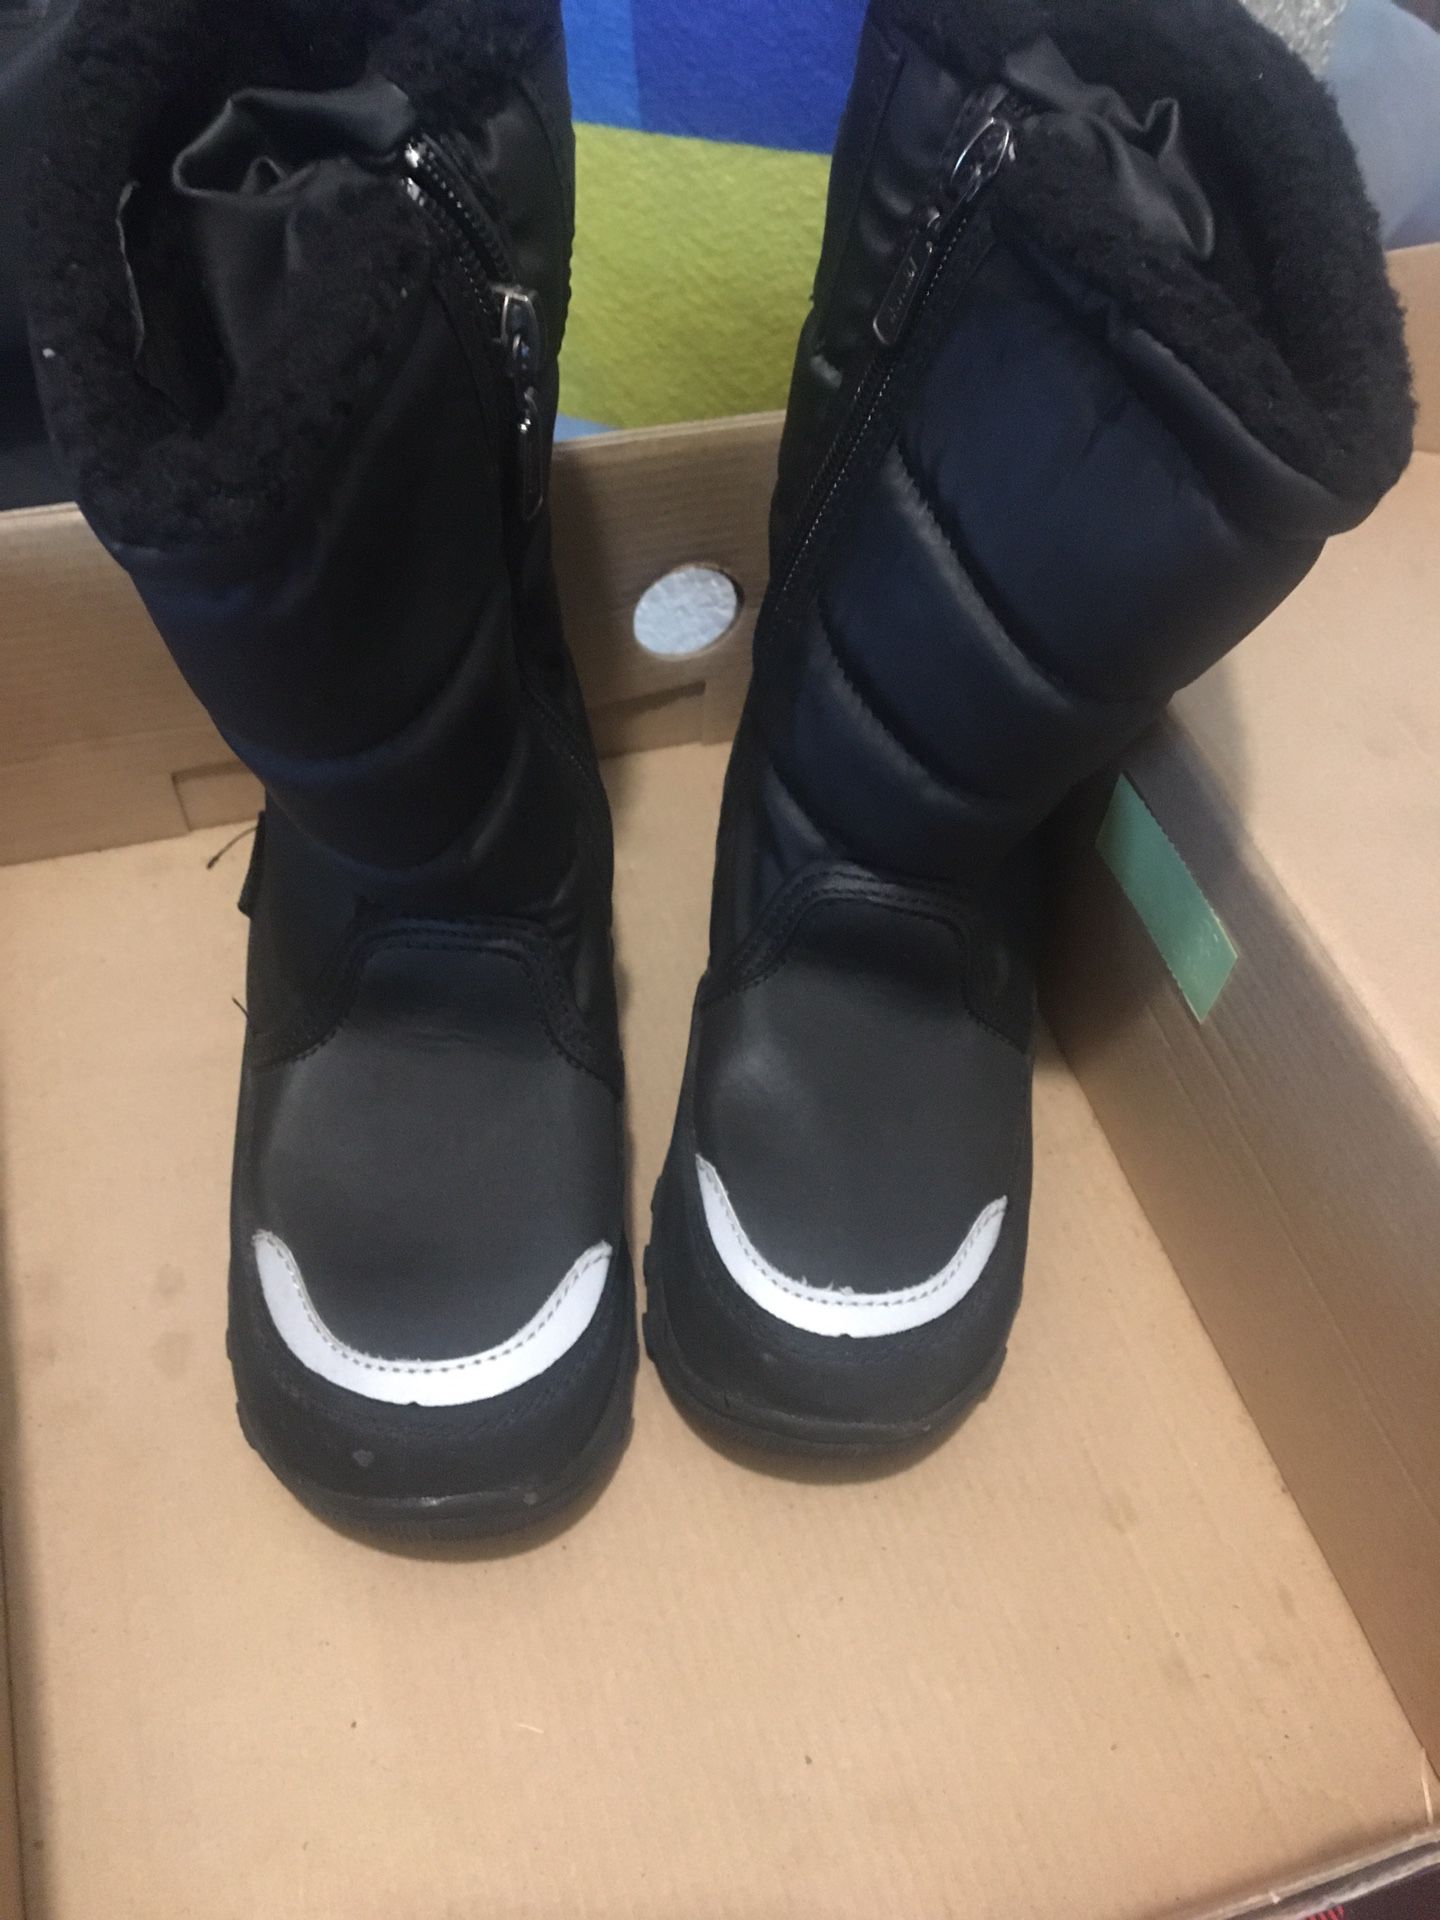 Kids Snow boots $10